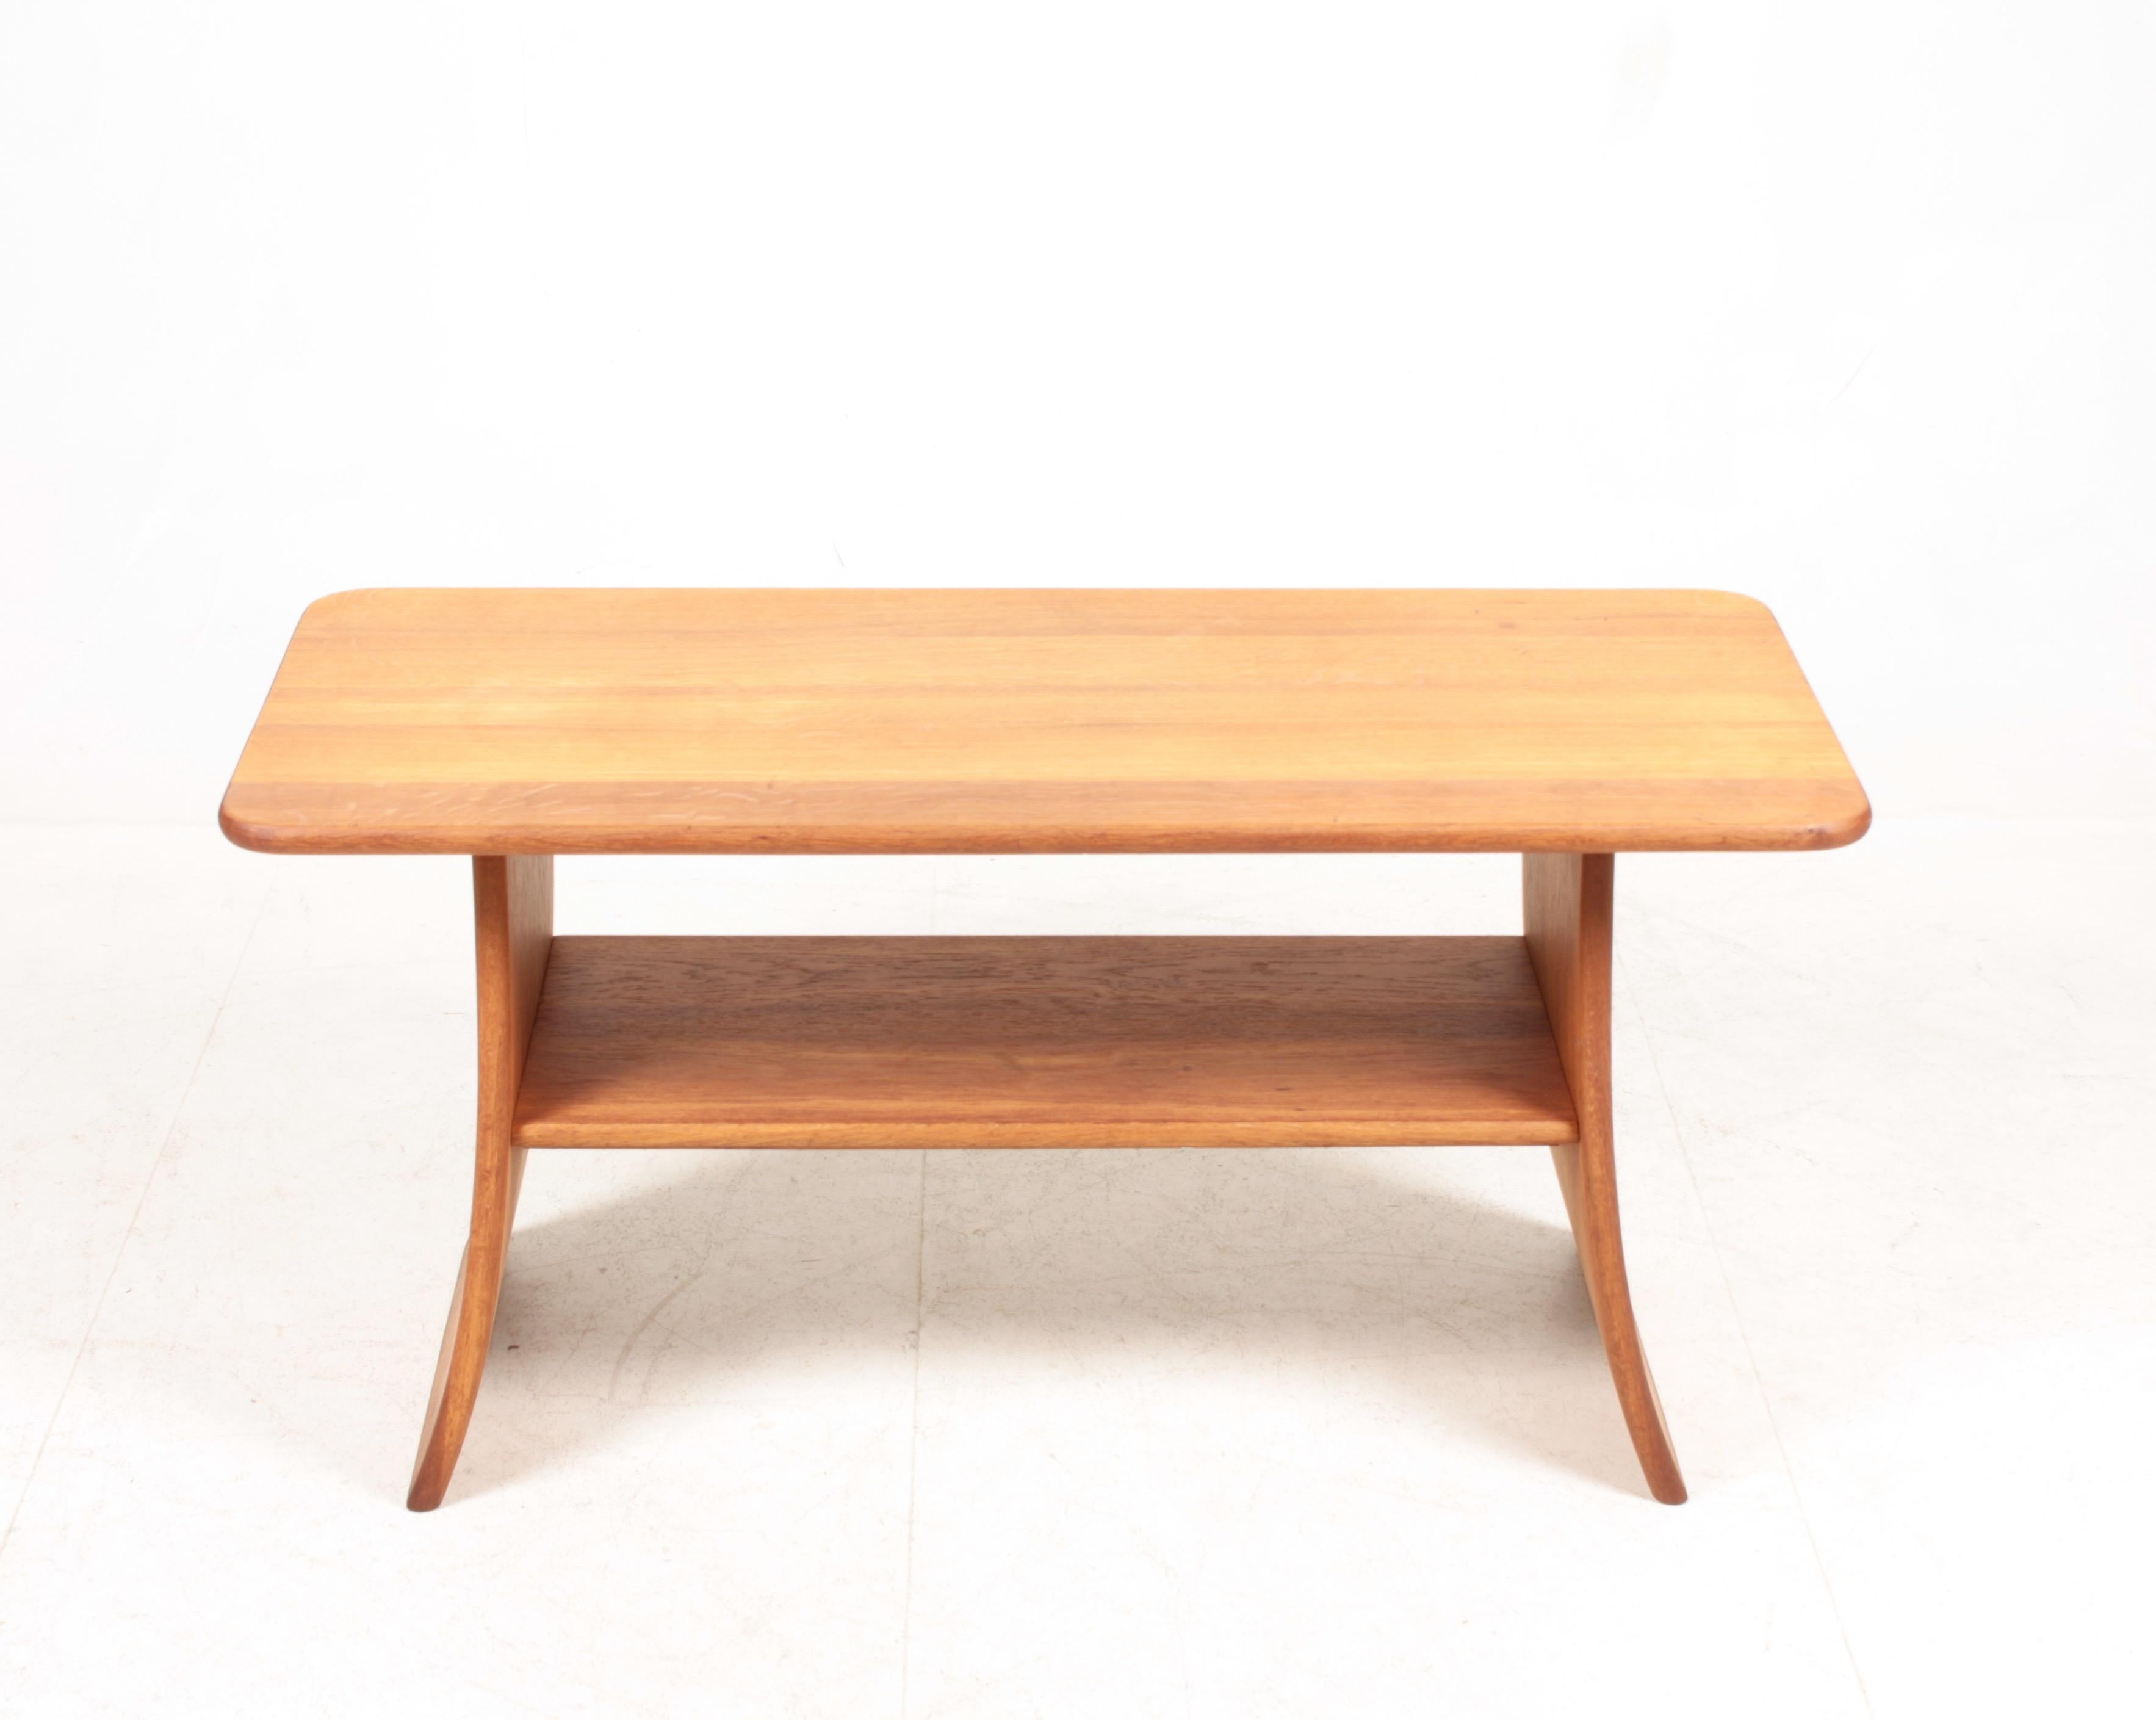 Scandinavian Modern Midcentury Low Table in Solid Oak, Danish Cabinetmaker, 1950s For Sale